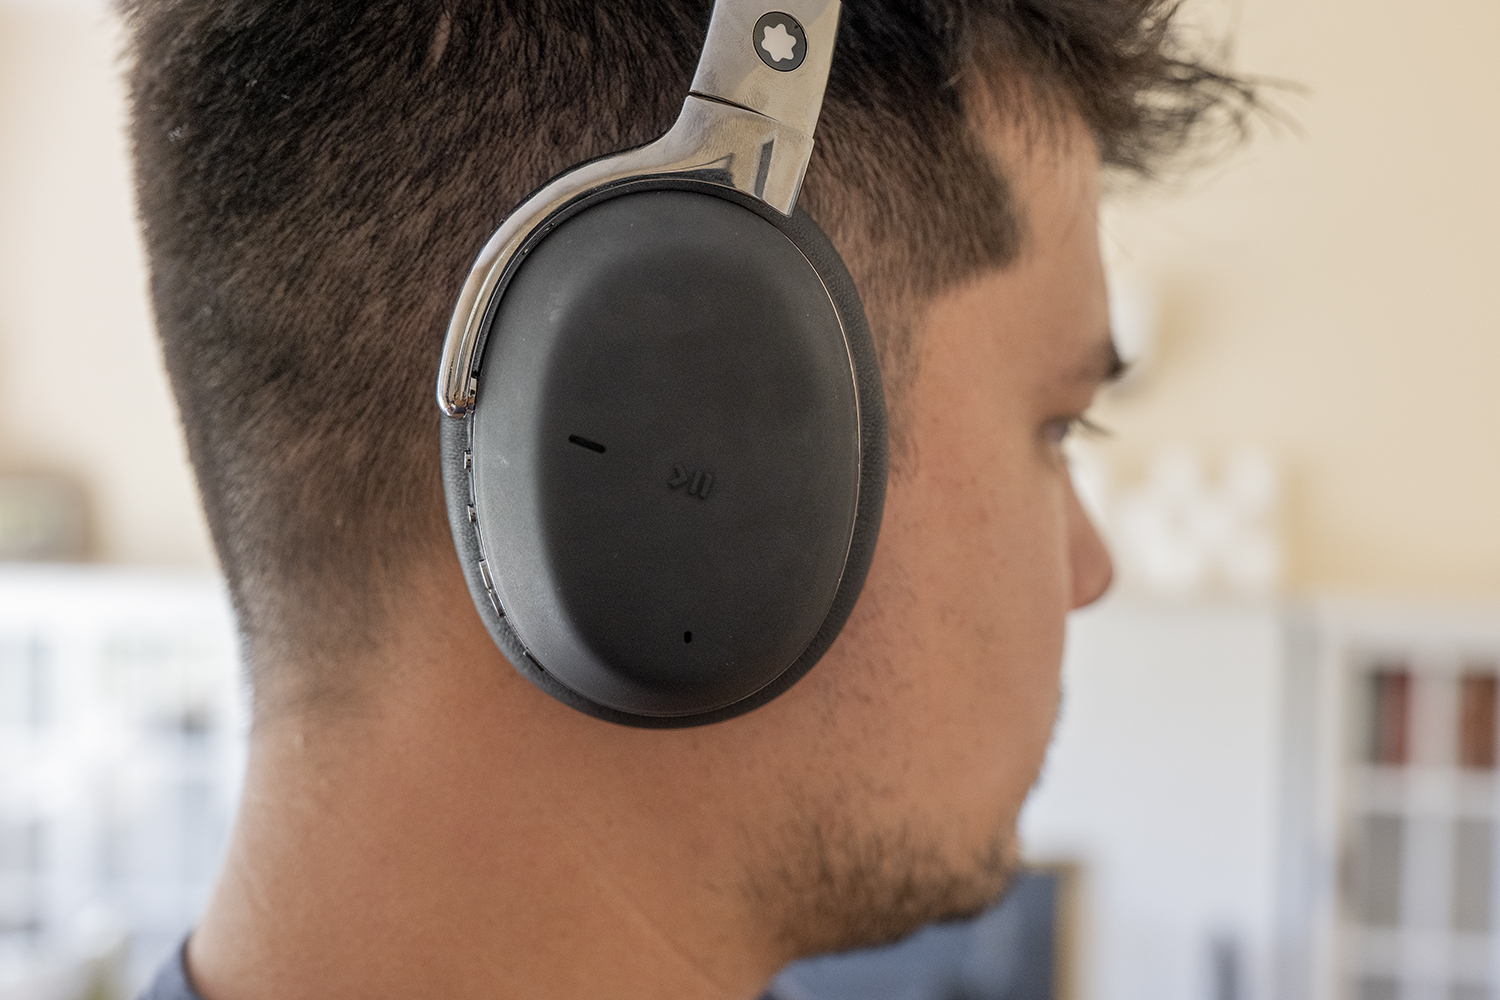 montblanc mb01 headphones review 10